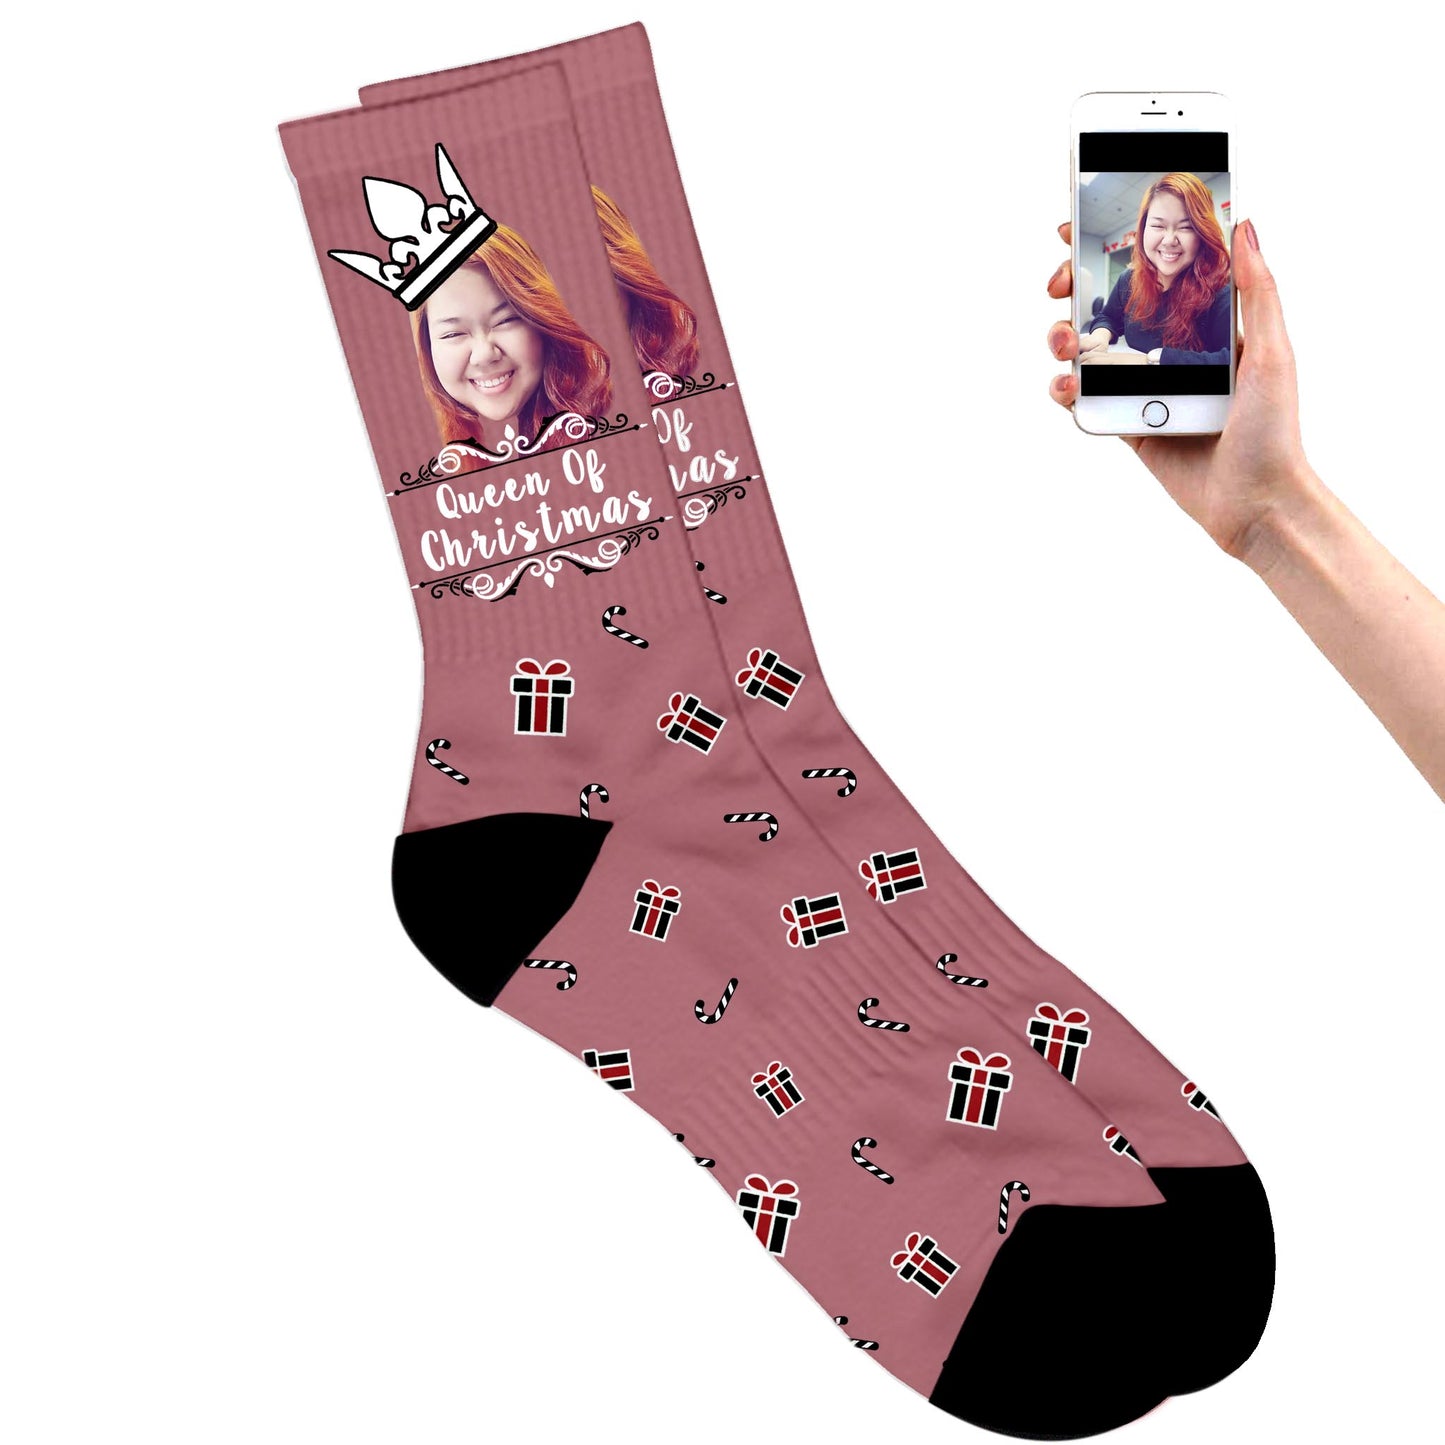 
                  
                    Queen of Christmas Socks
                  
                